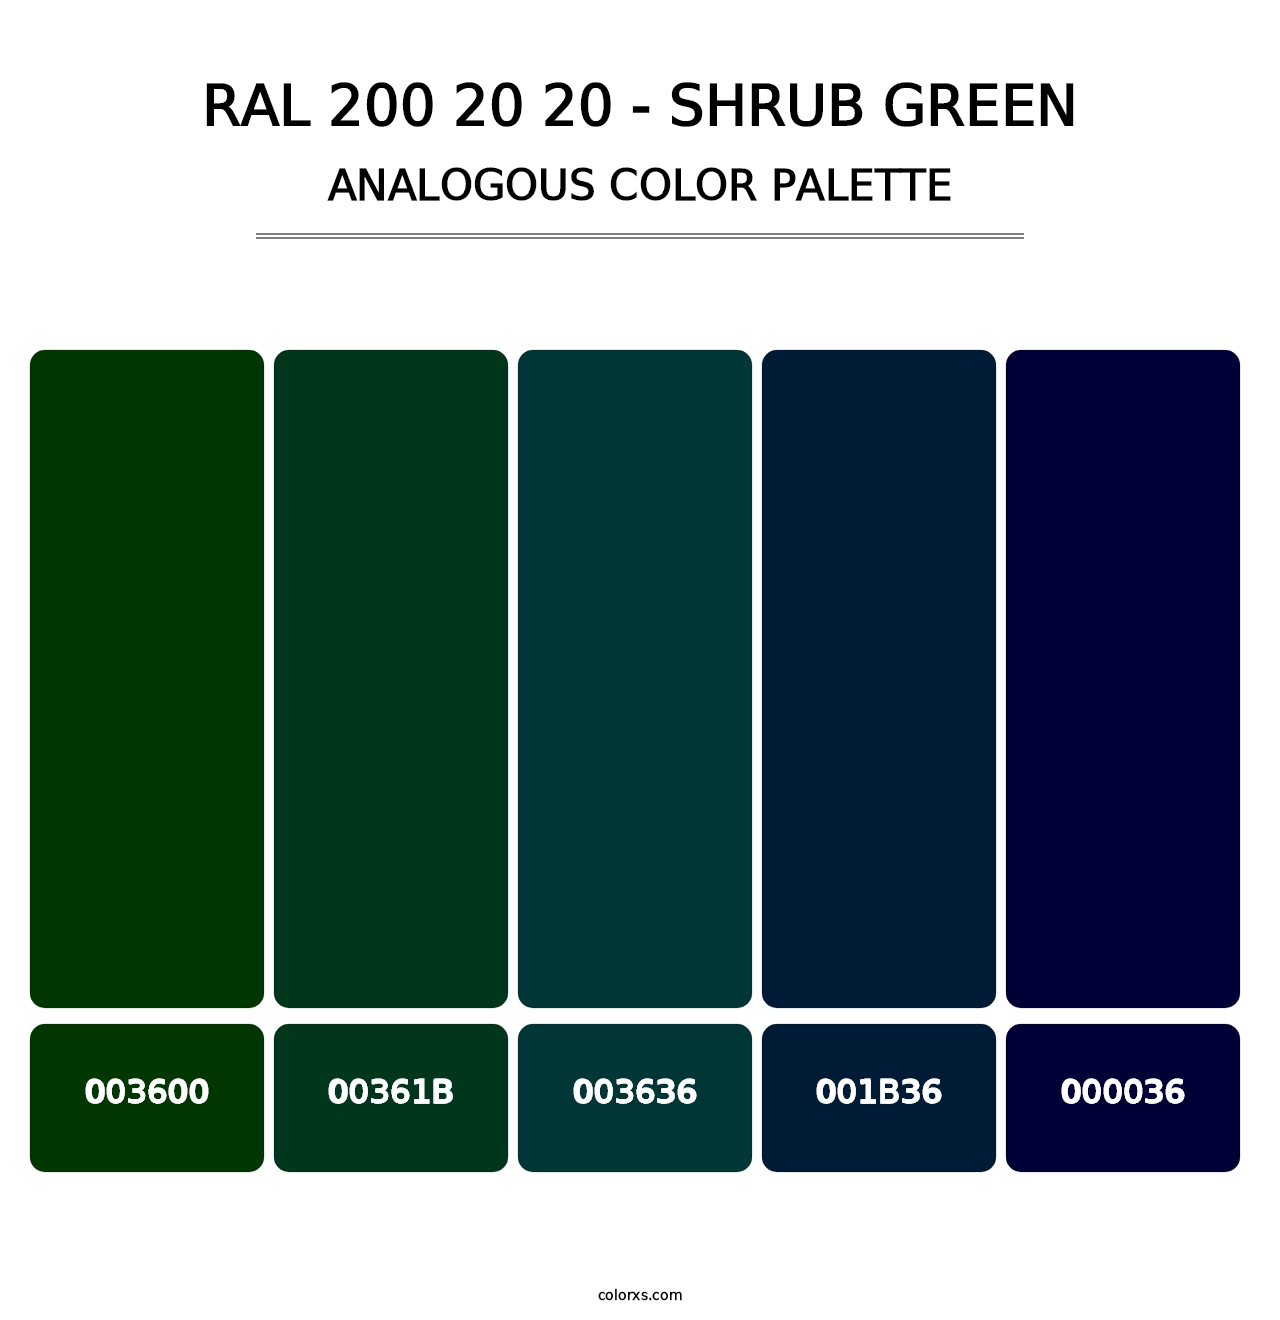 RAL 200 20 20 - Shrub Green - Analogous Color Palette